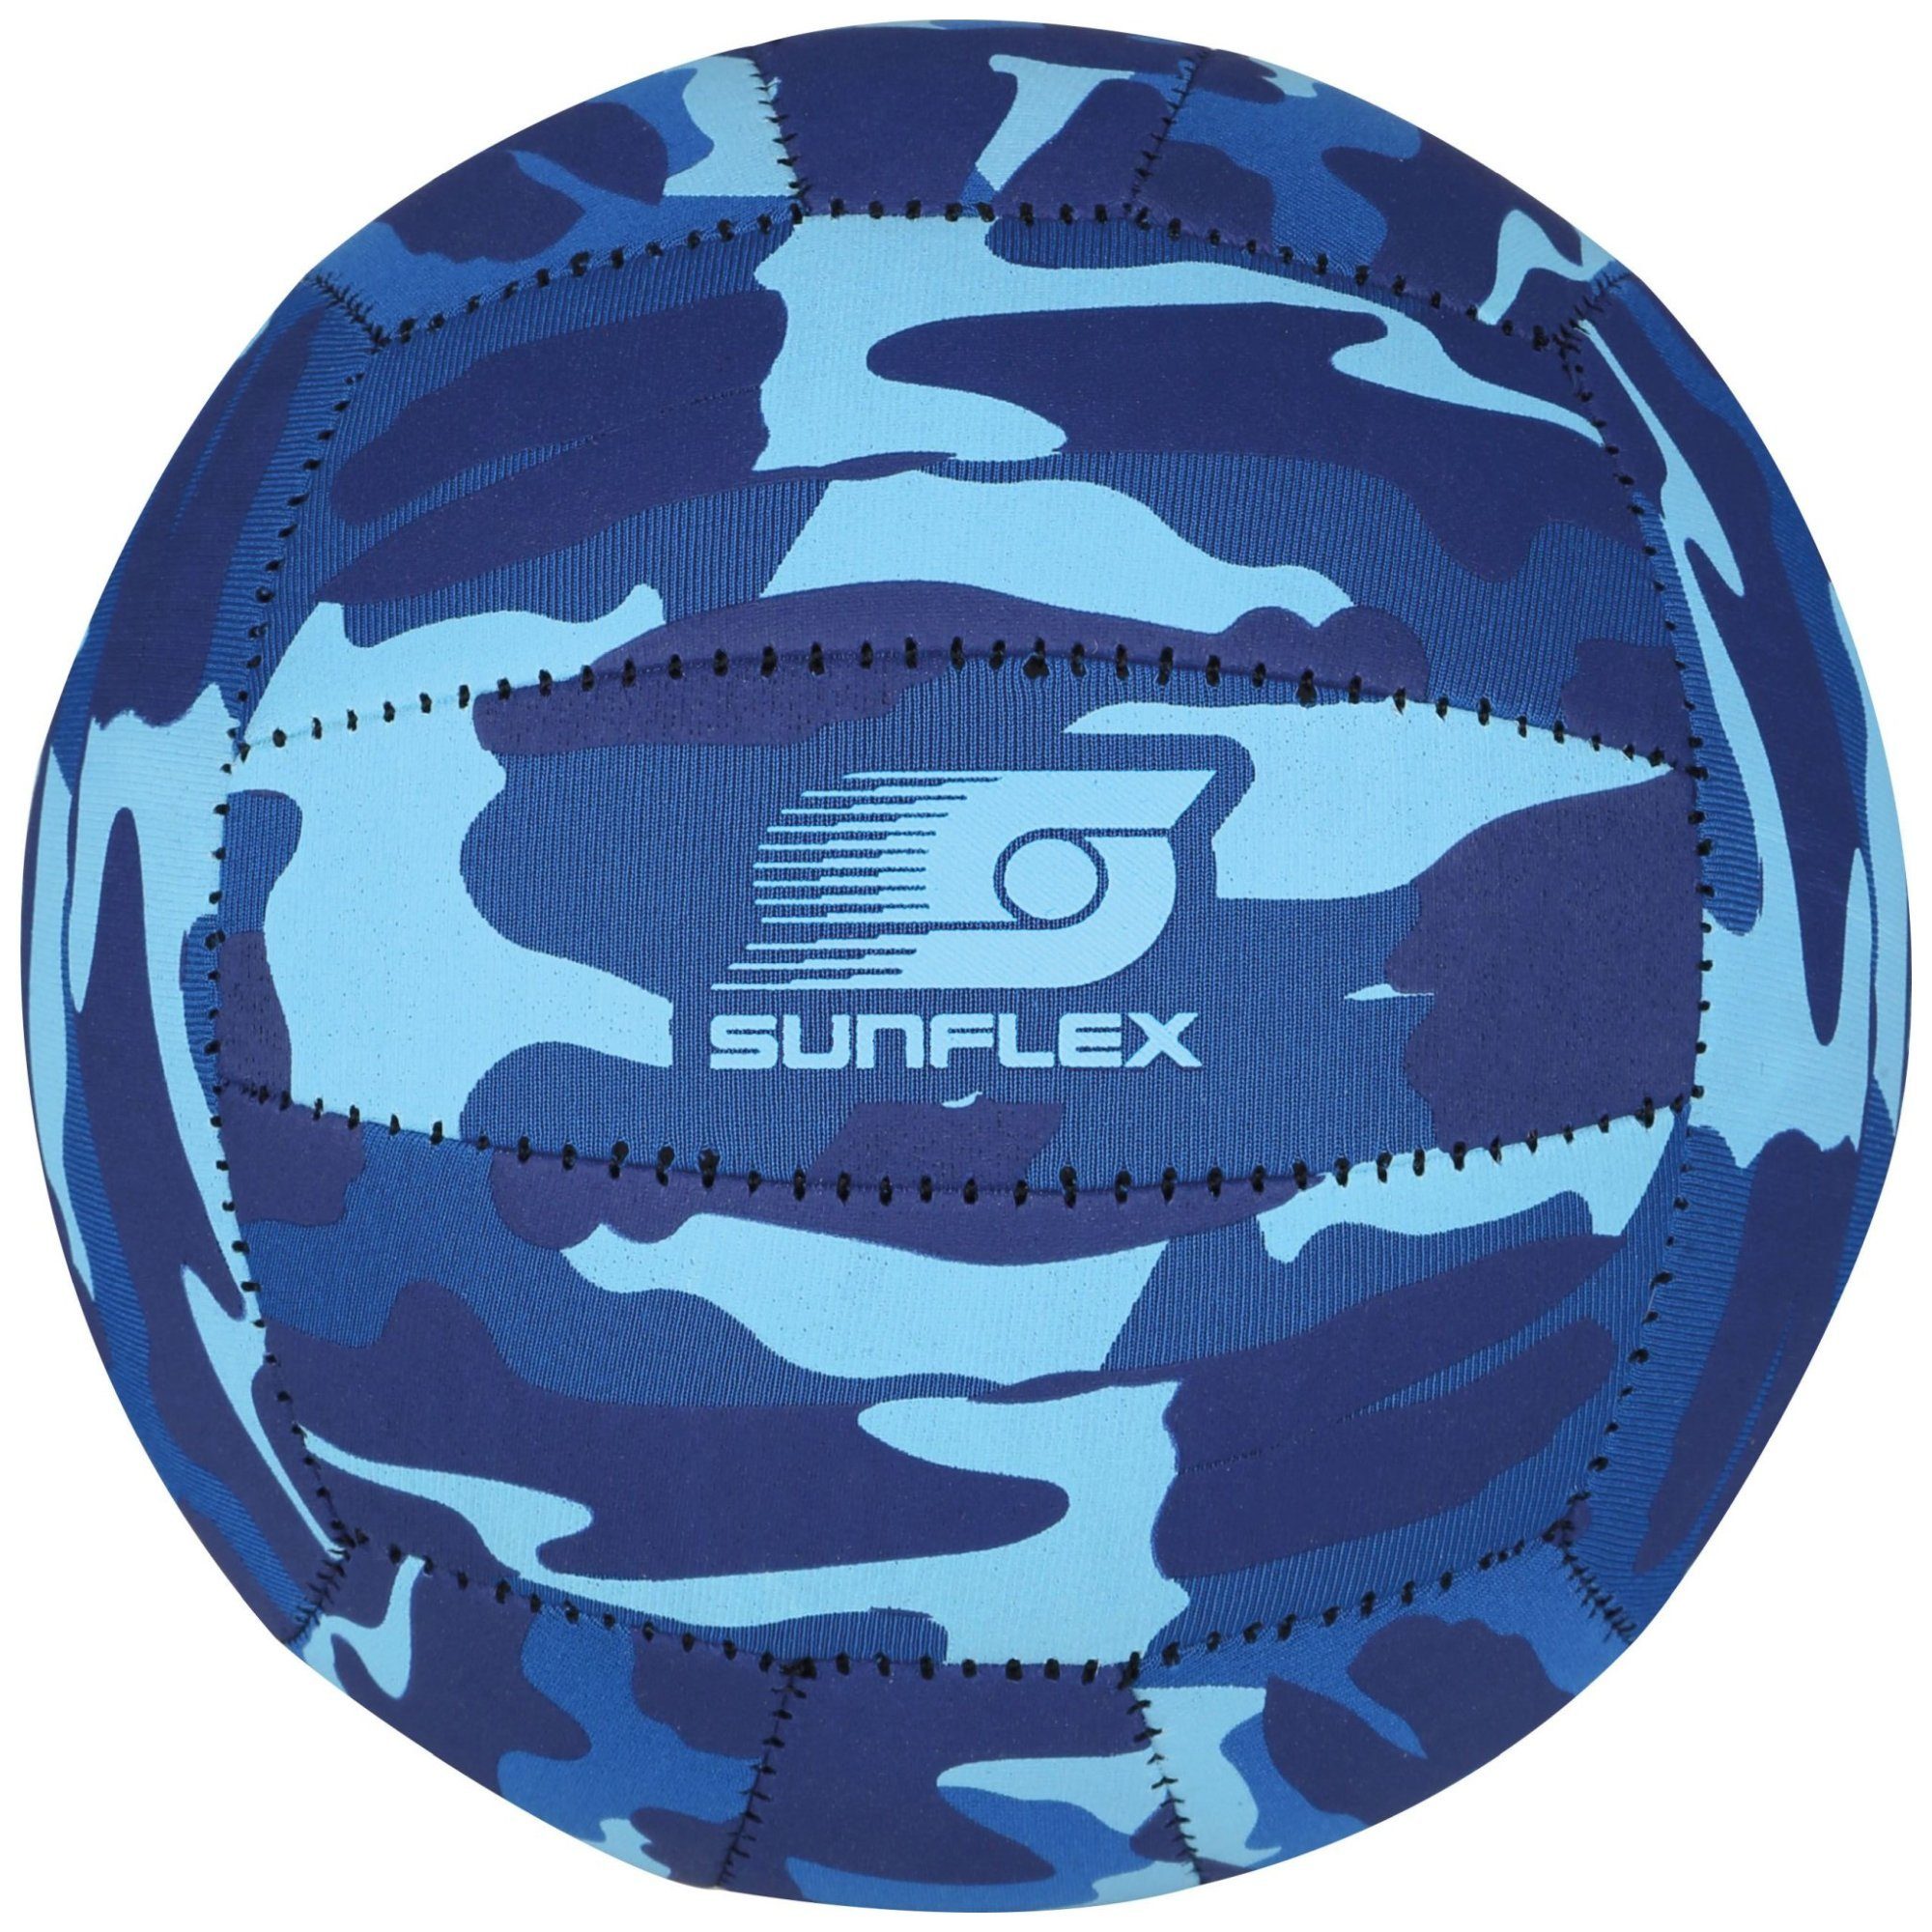 Sunflex Beachsoccerball sunflex Beach- und Funball Size 3 Camo blau